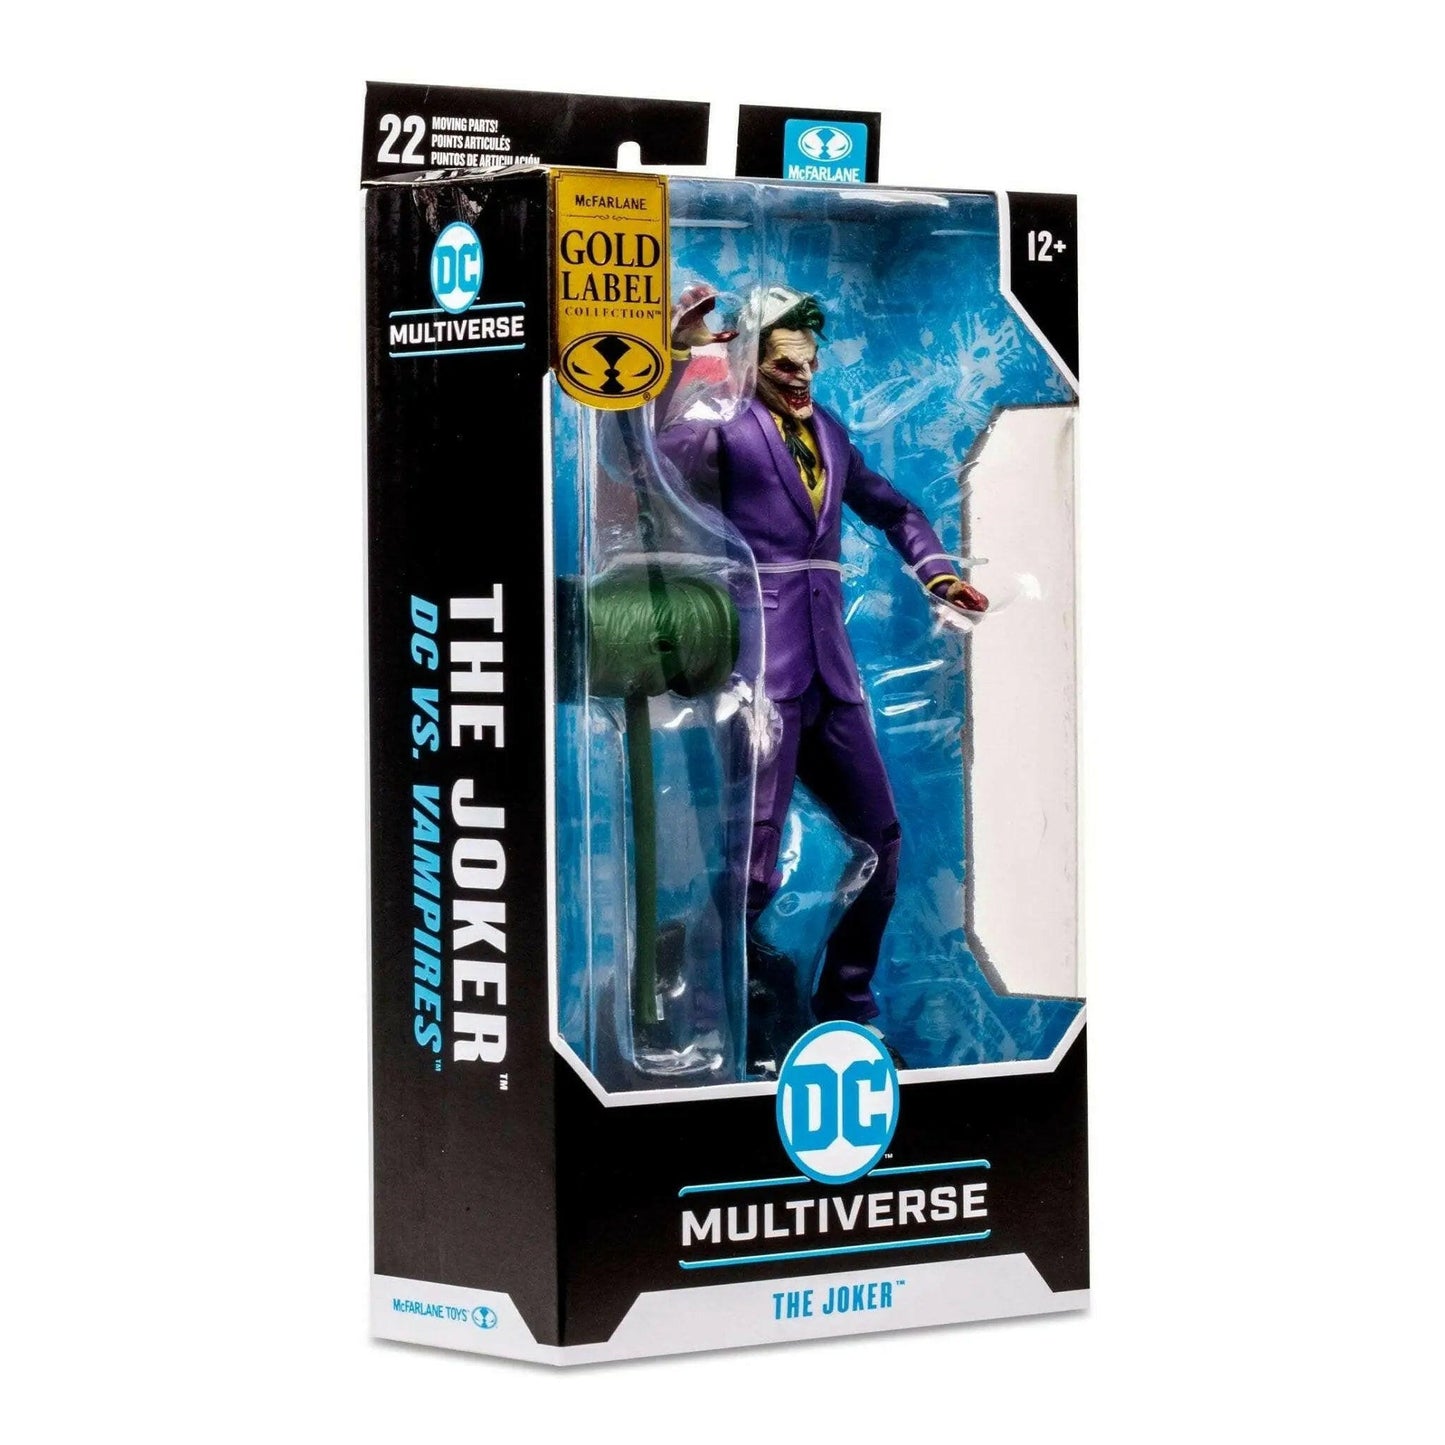 McFarlane DC Multiverse Actionfigur The Joker (DC VS Vampires) (Gold Label) 18cm - Toy-Storage